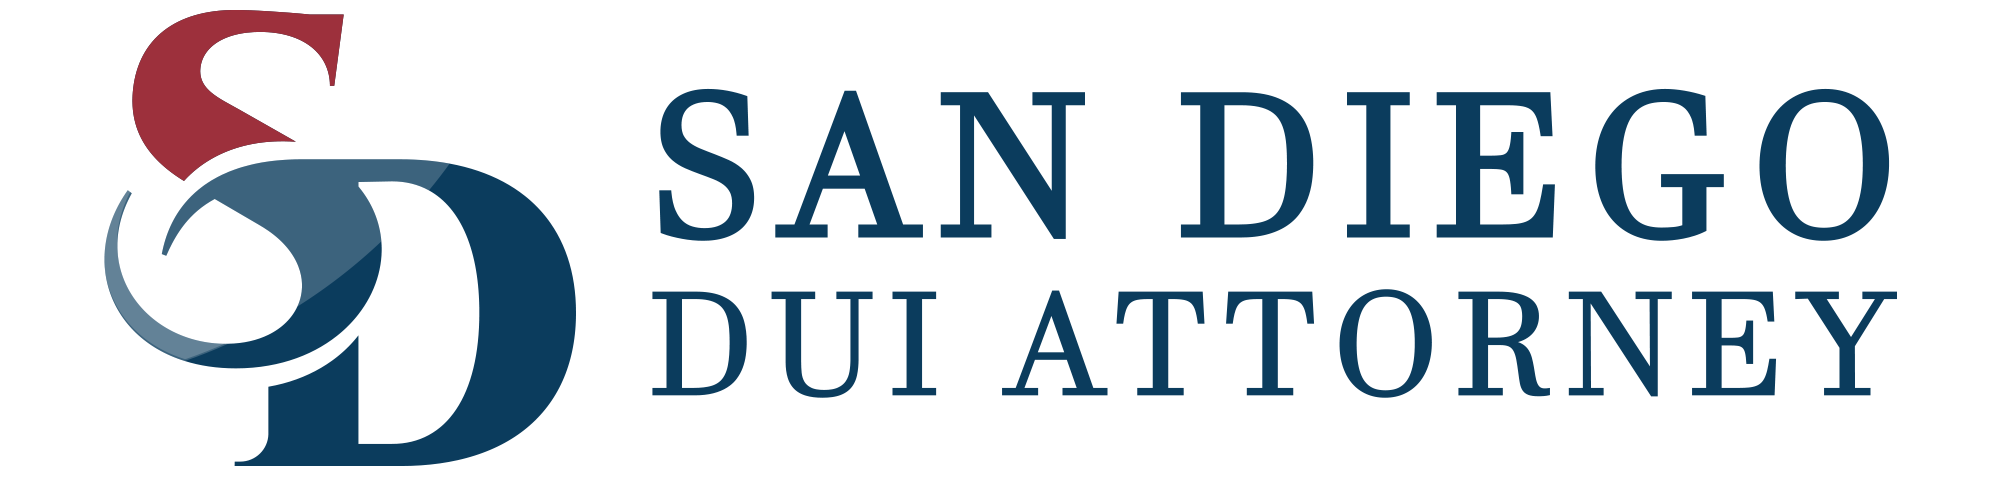 San Diego DUI Attorney logo